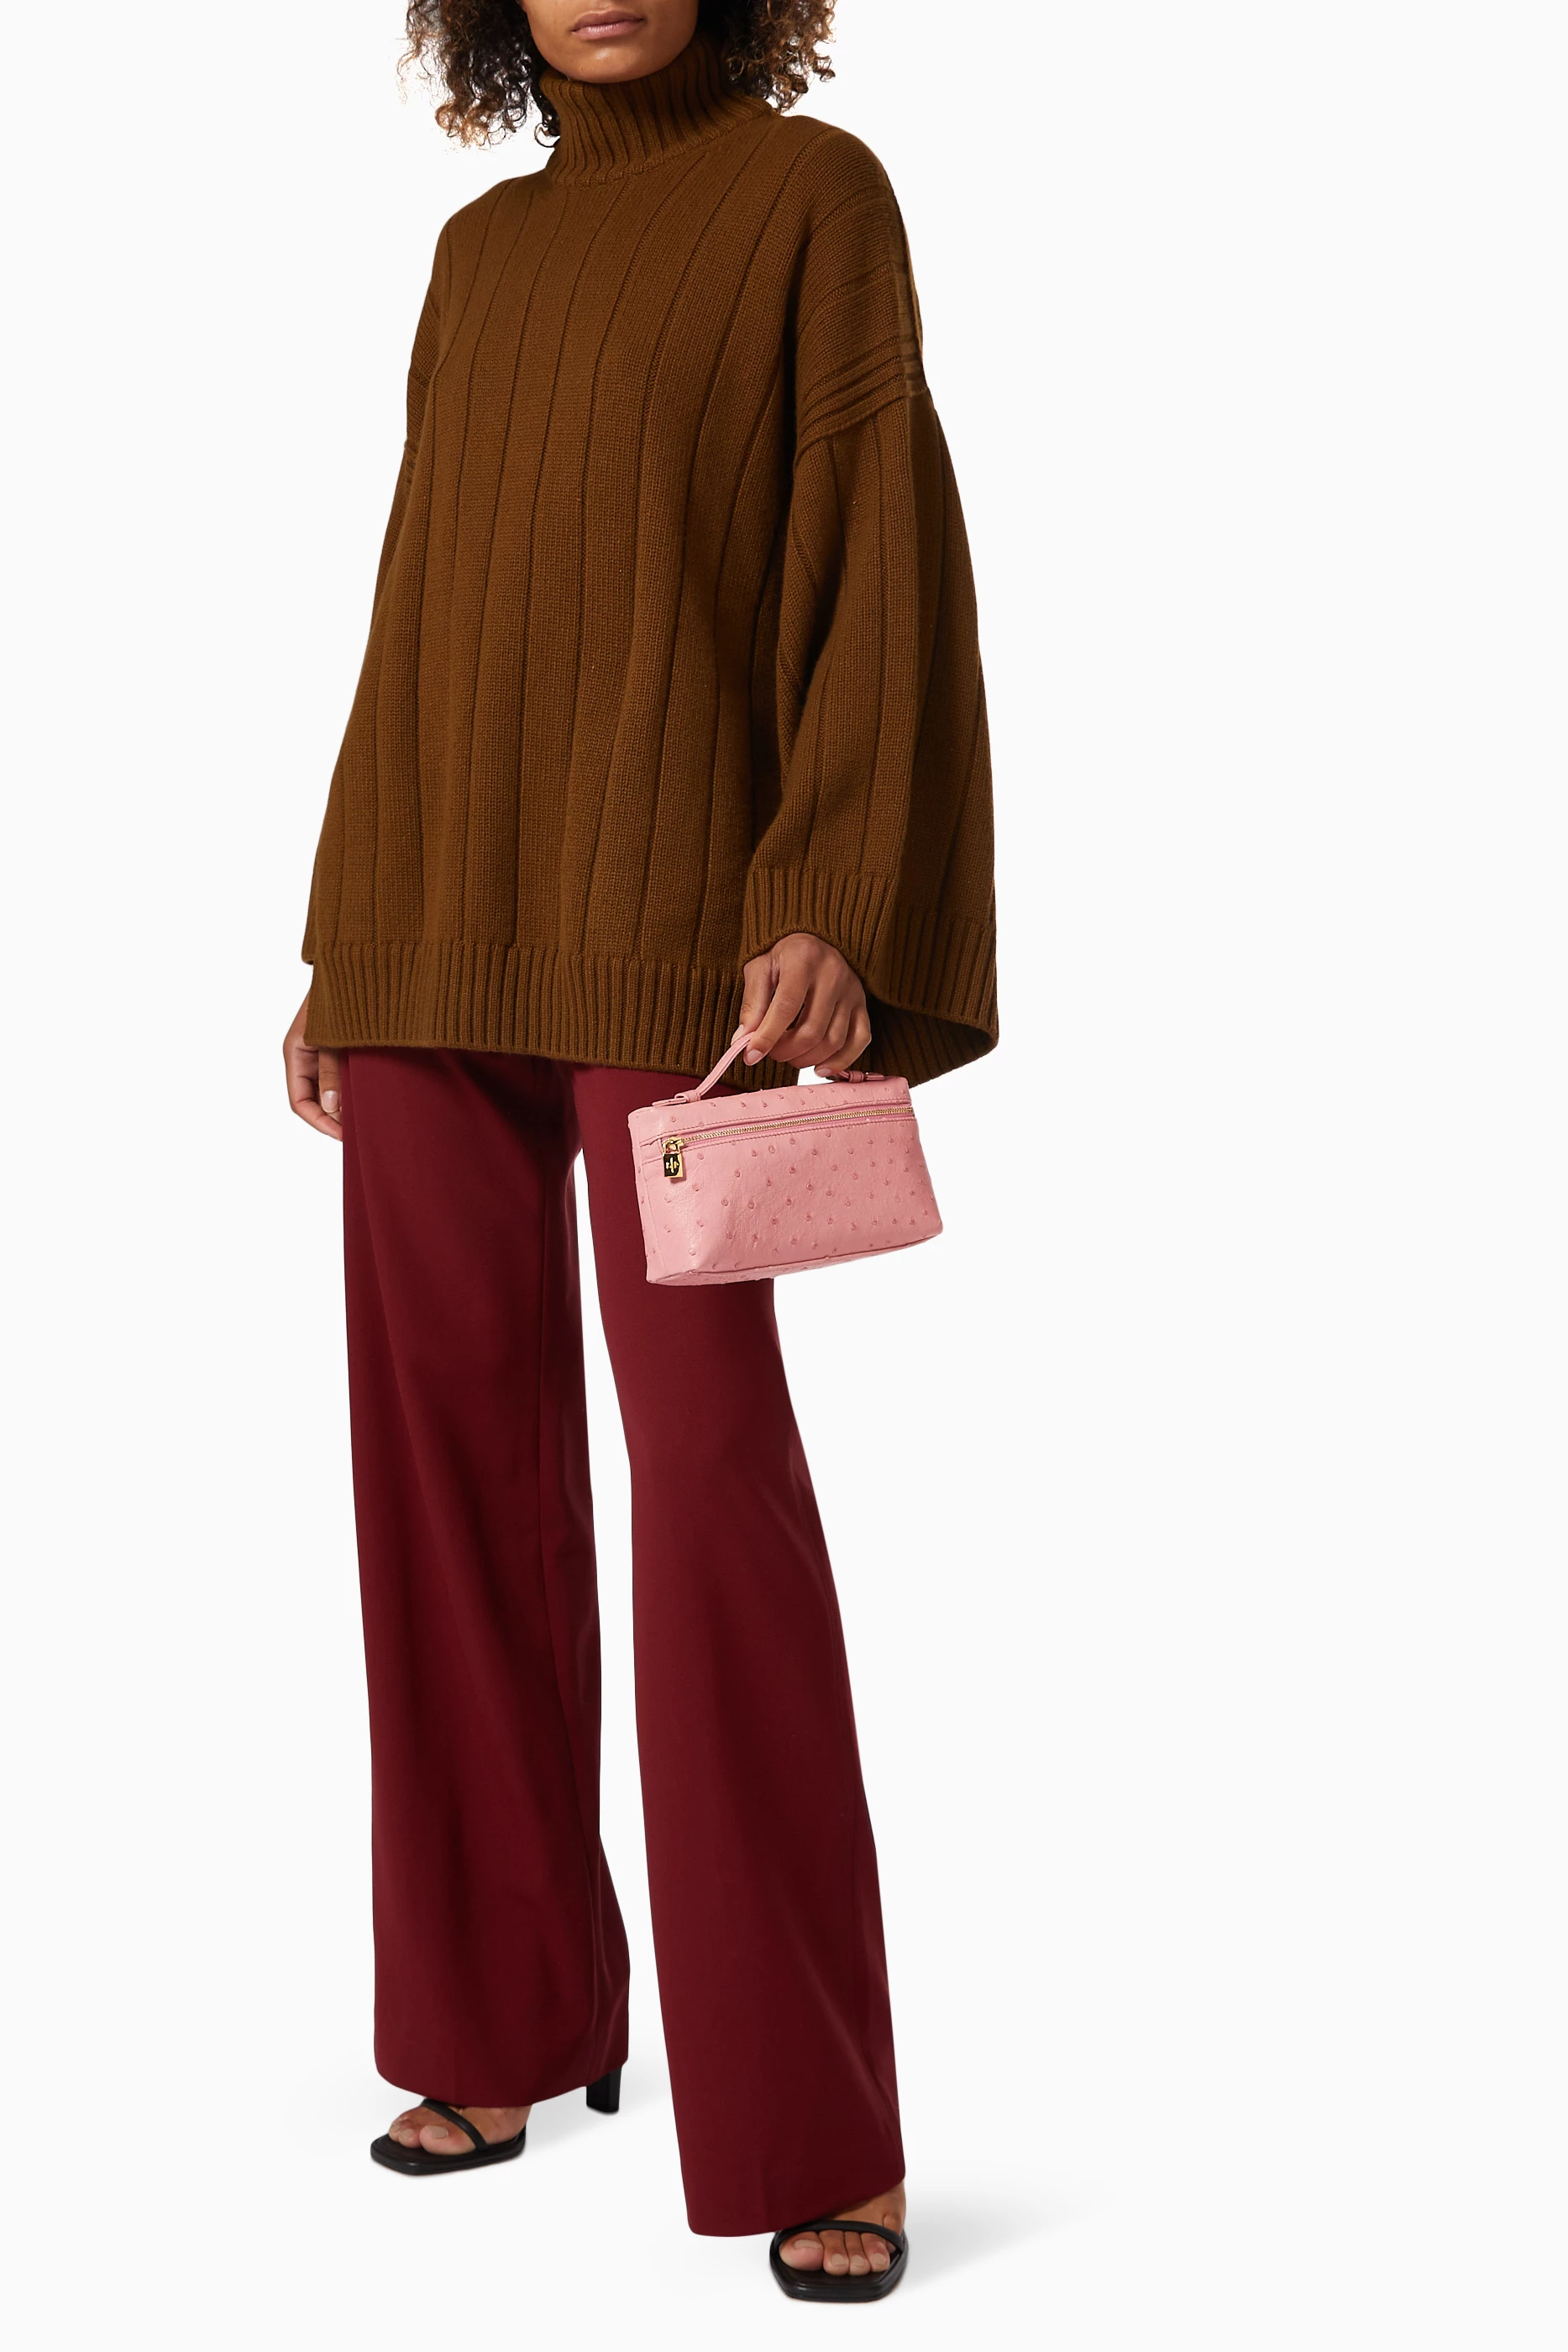 Loro Piana Pink Ostrich Leather Zip L19 Pouch Loro Piana | The Luxury Closet